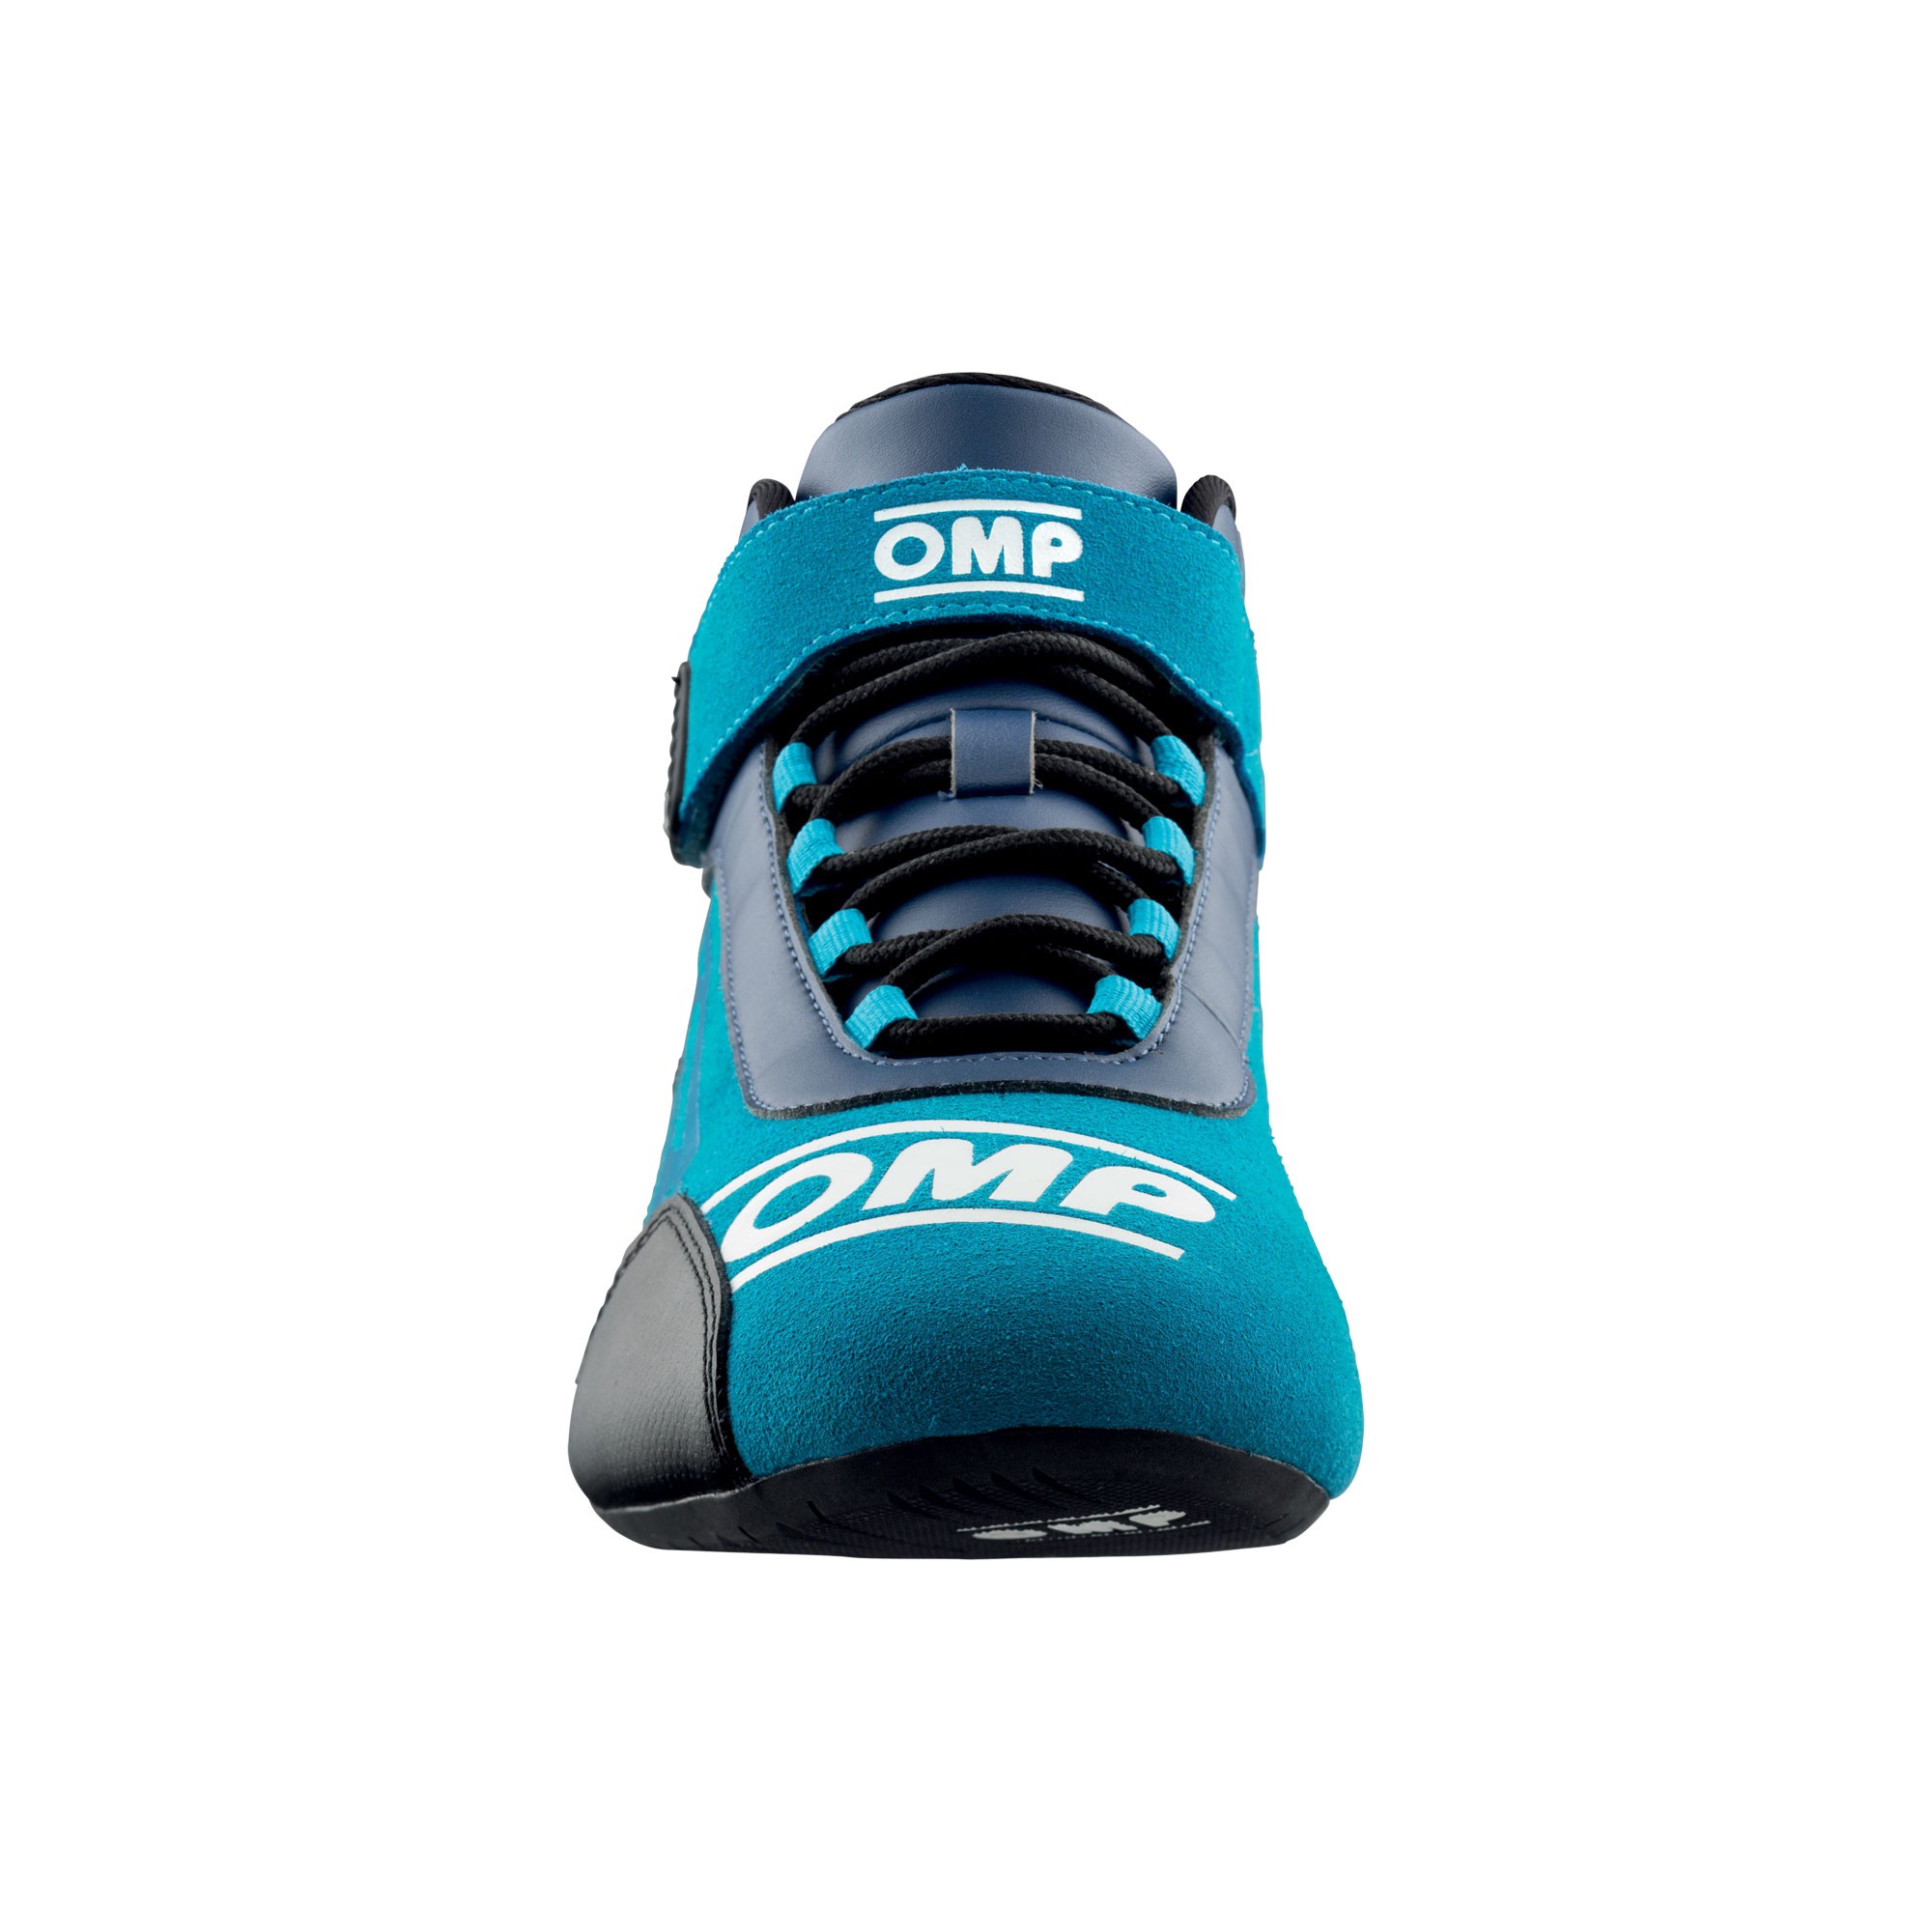 Talla 42 UK Size 8 OMP ompic/81324142 KS-3 Karting Shoes Blue/Black/Cyan 